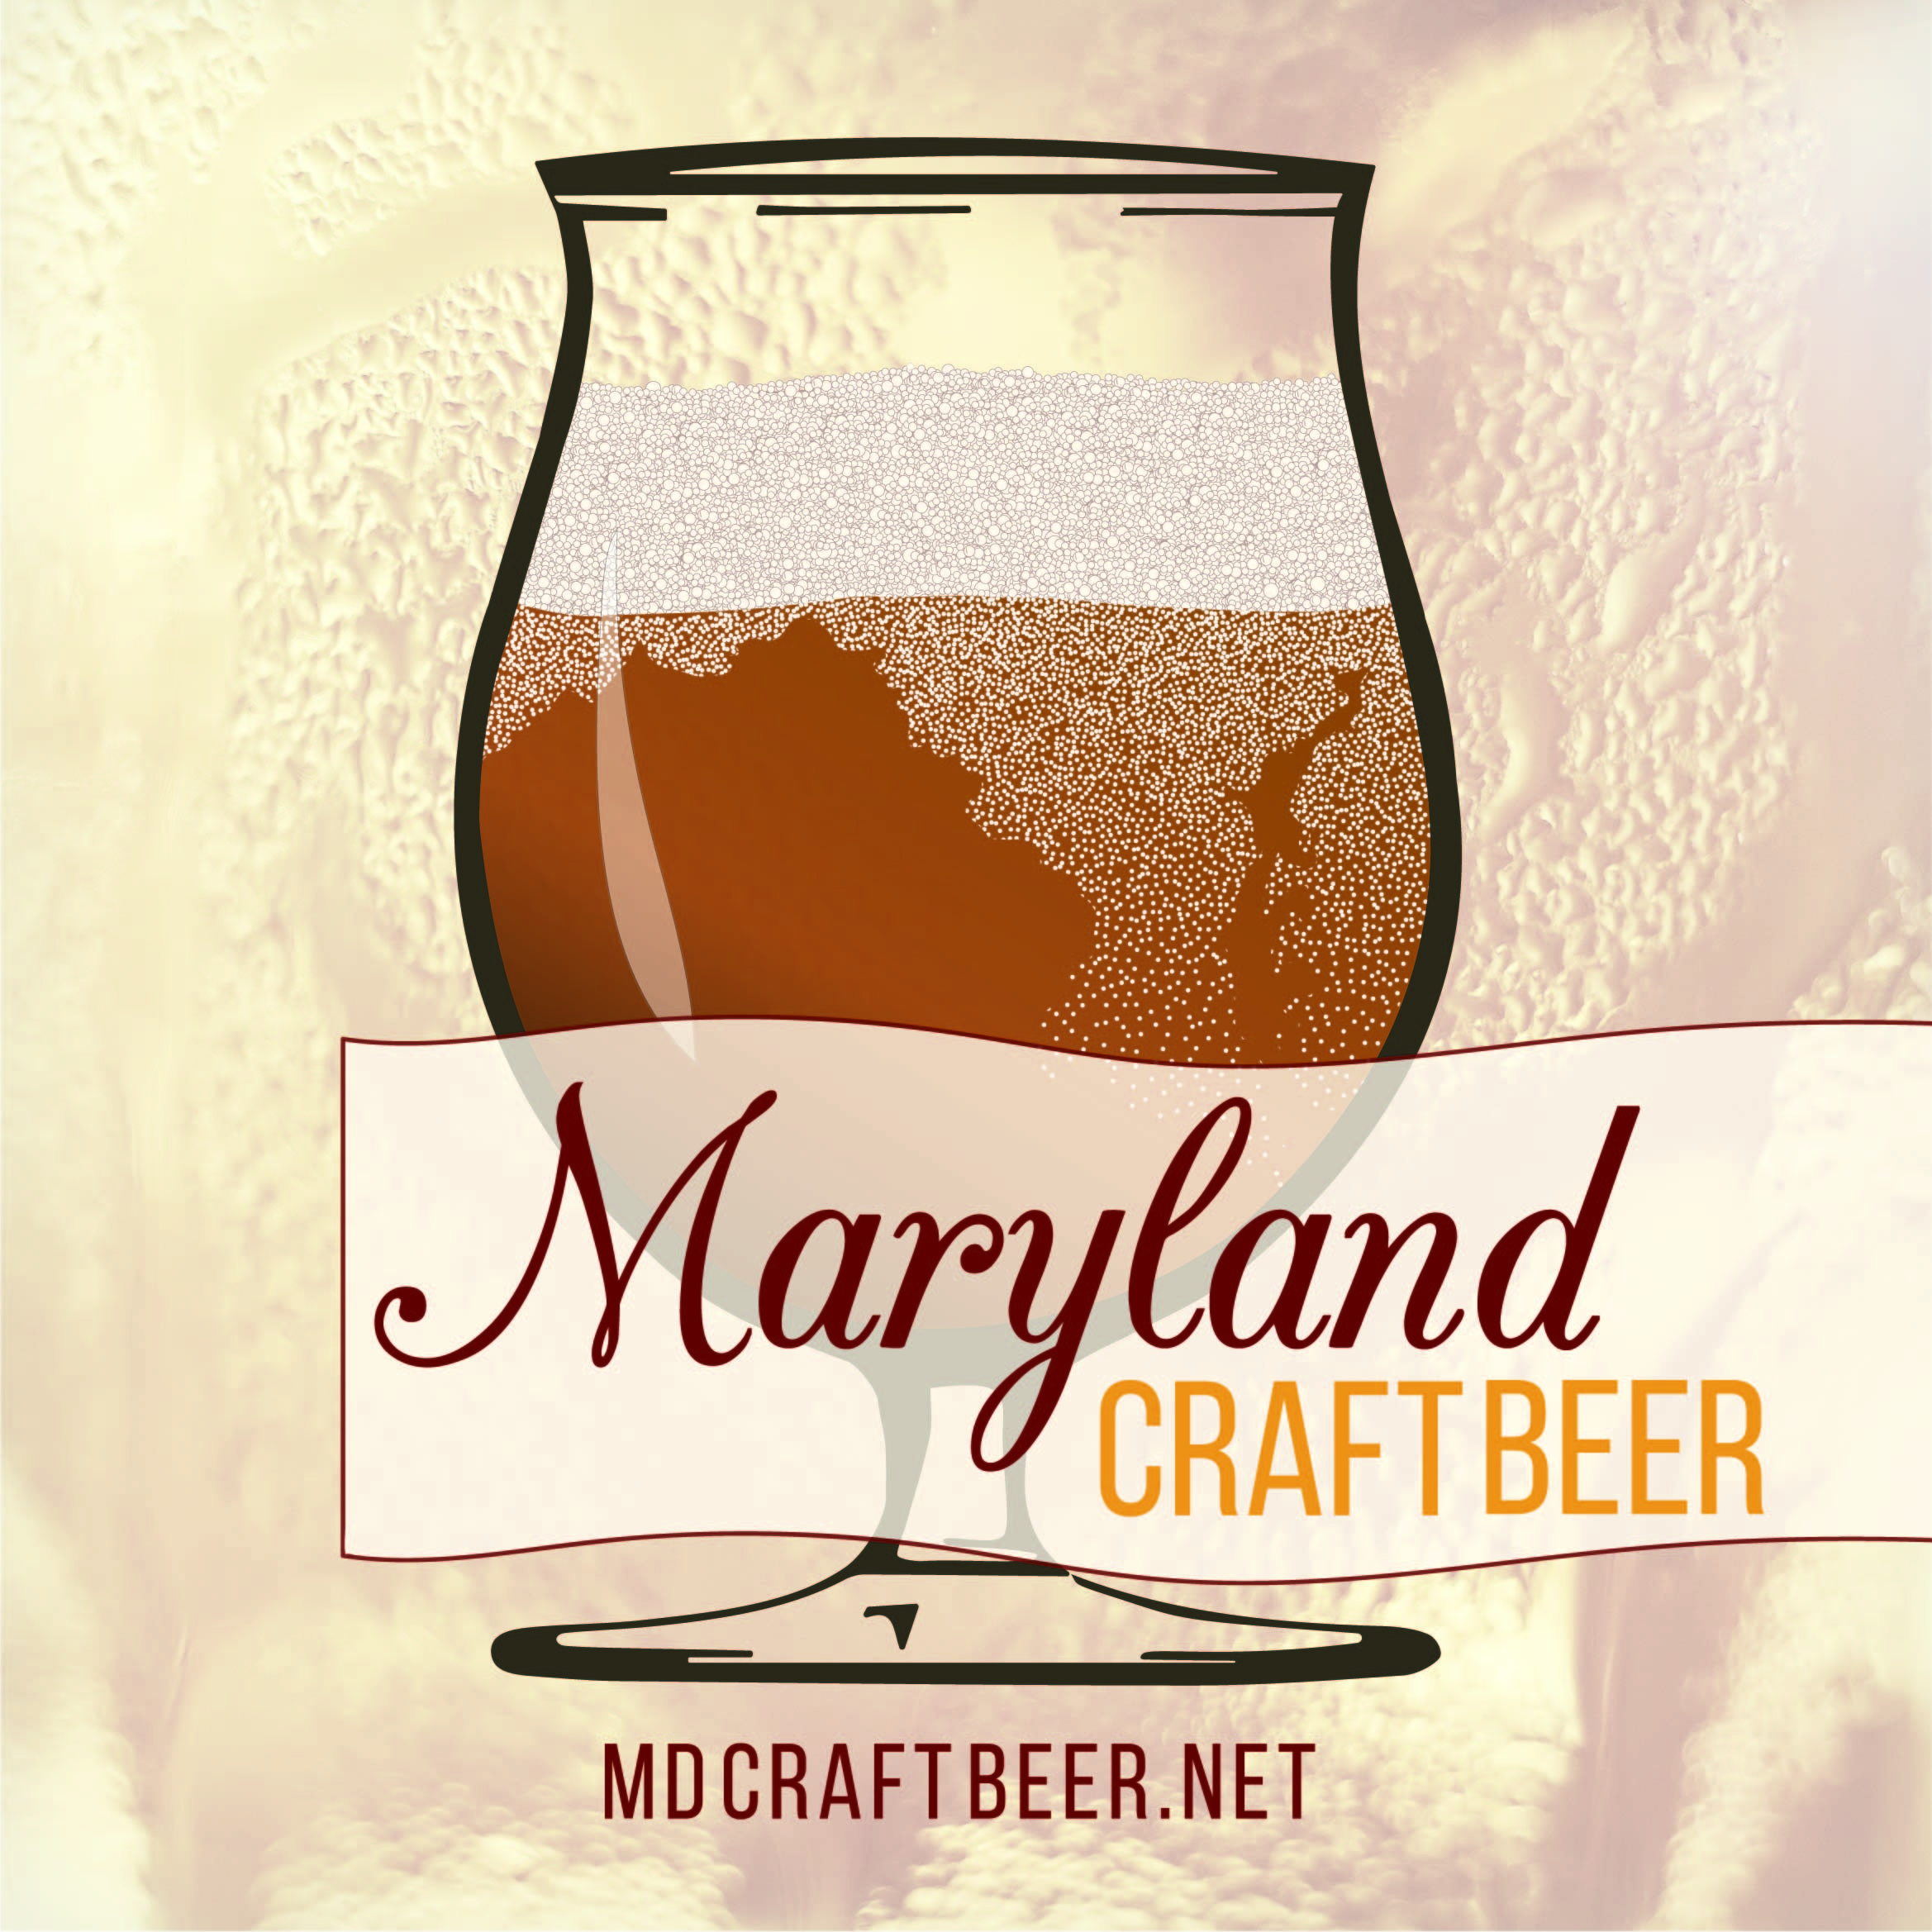 Maryland Craft Beer